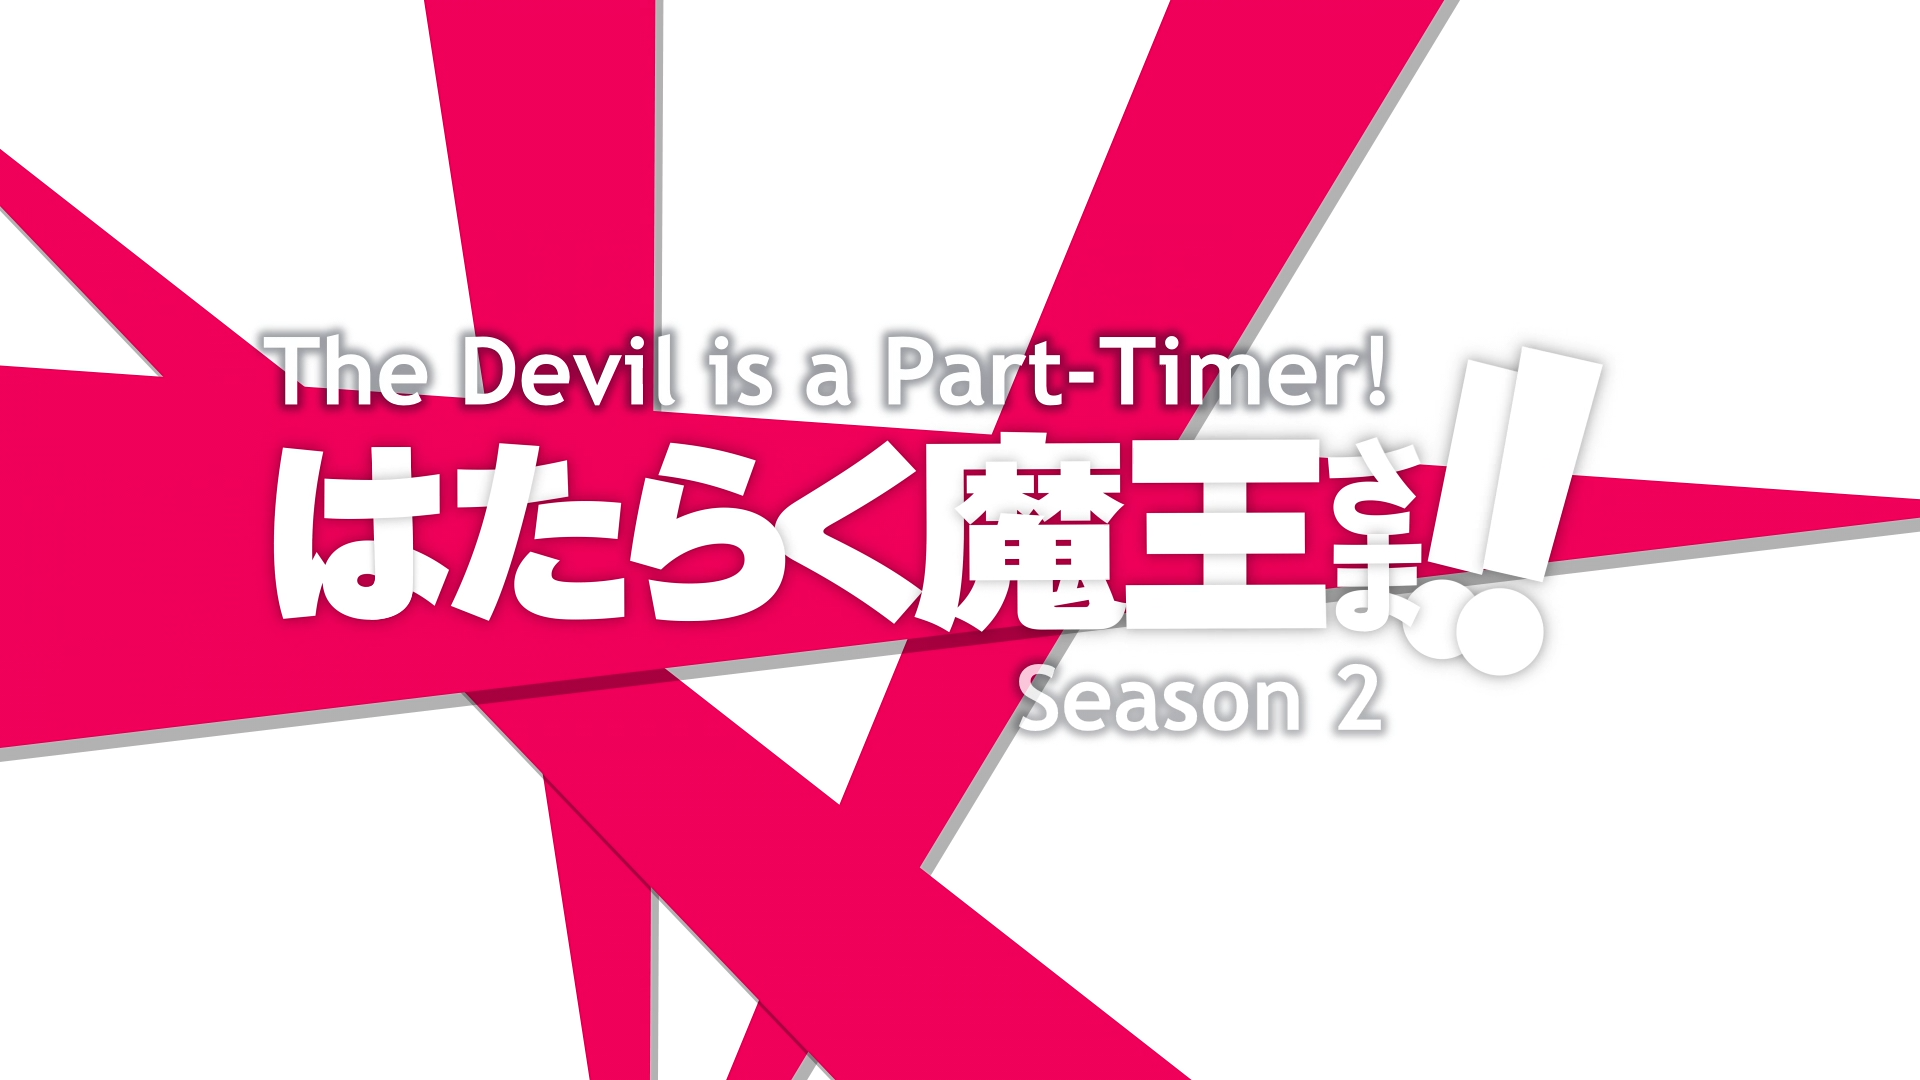 The Devil is a Part-Timer! Season 2